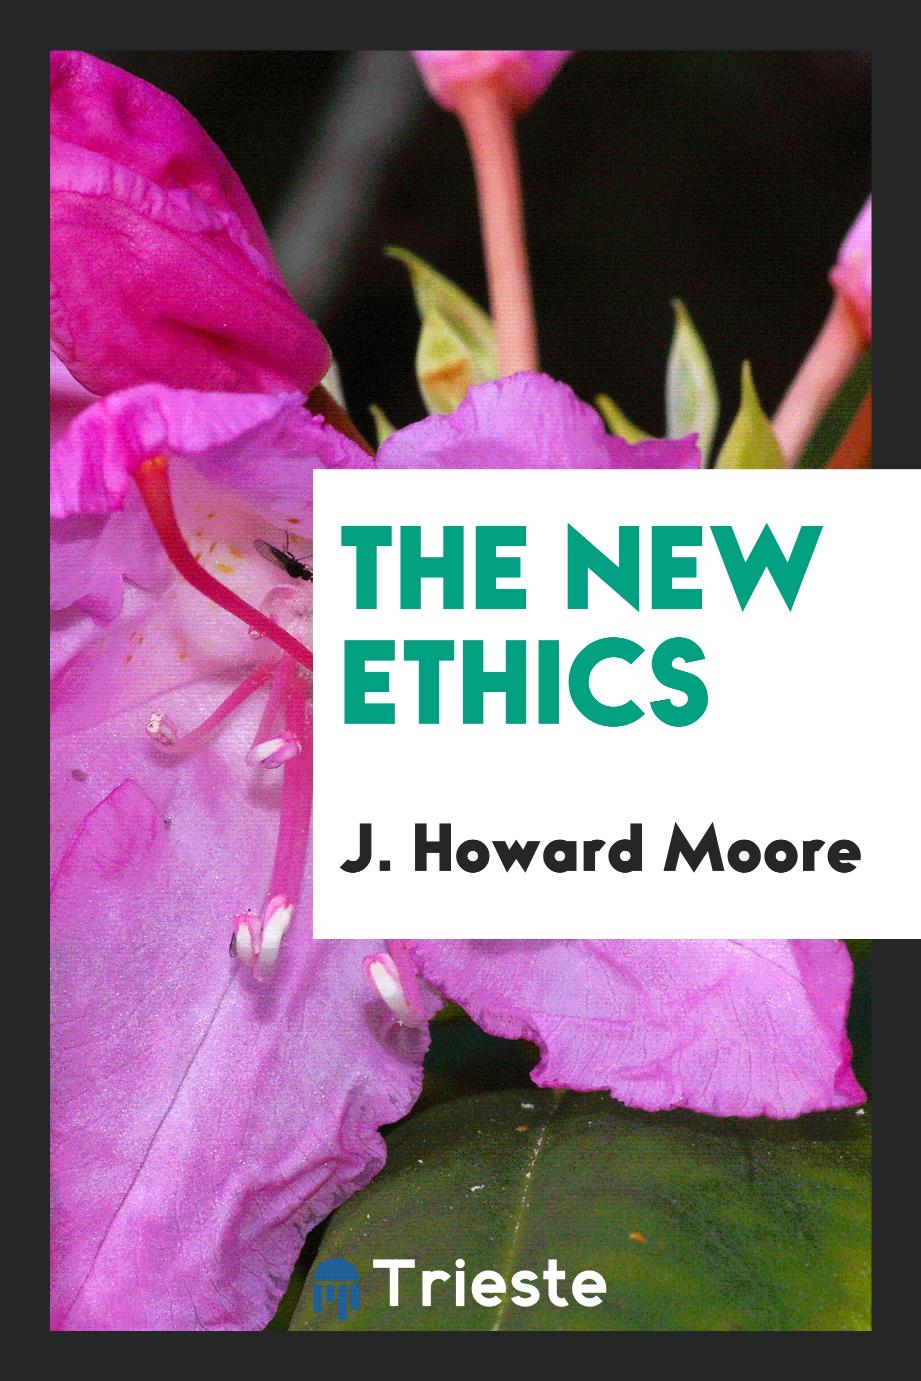 The new ethics